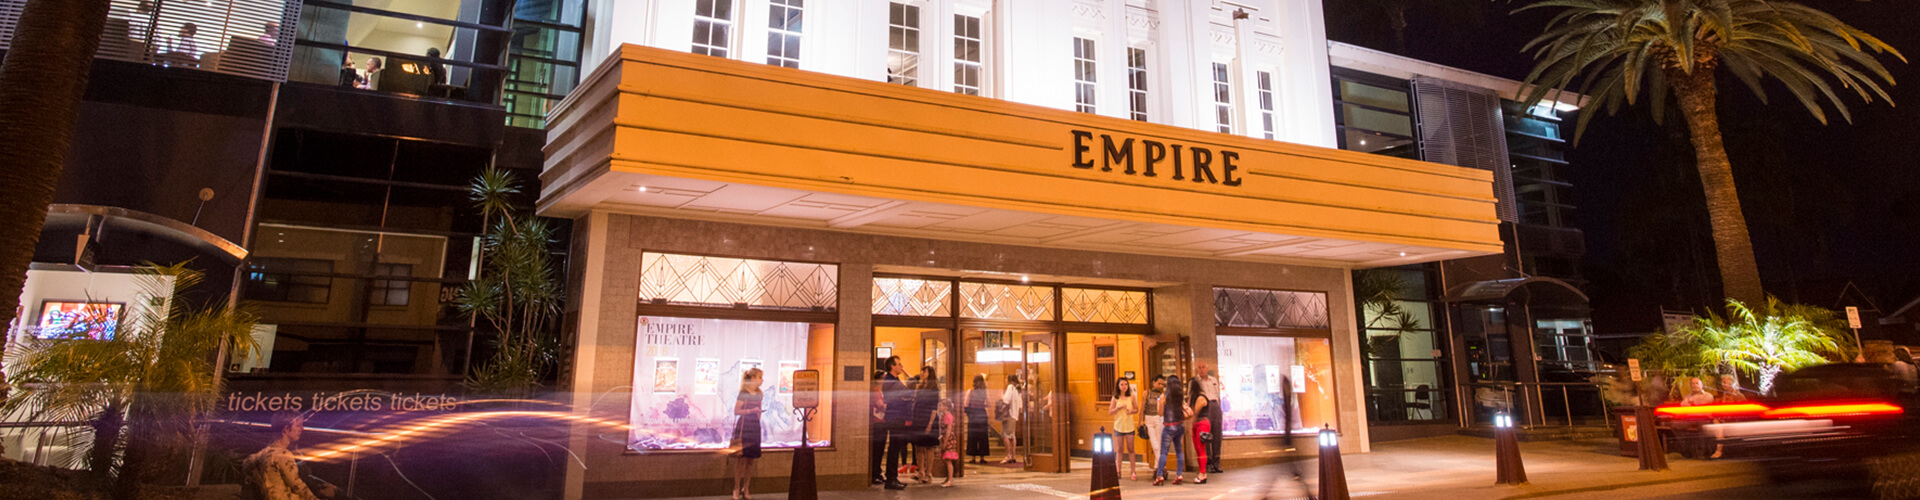 entry of empire theatre